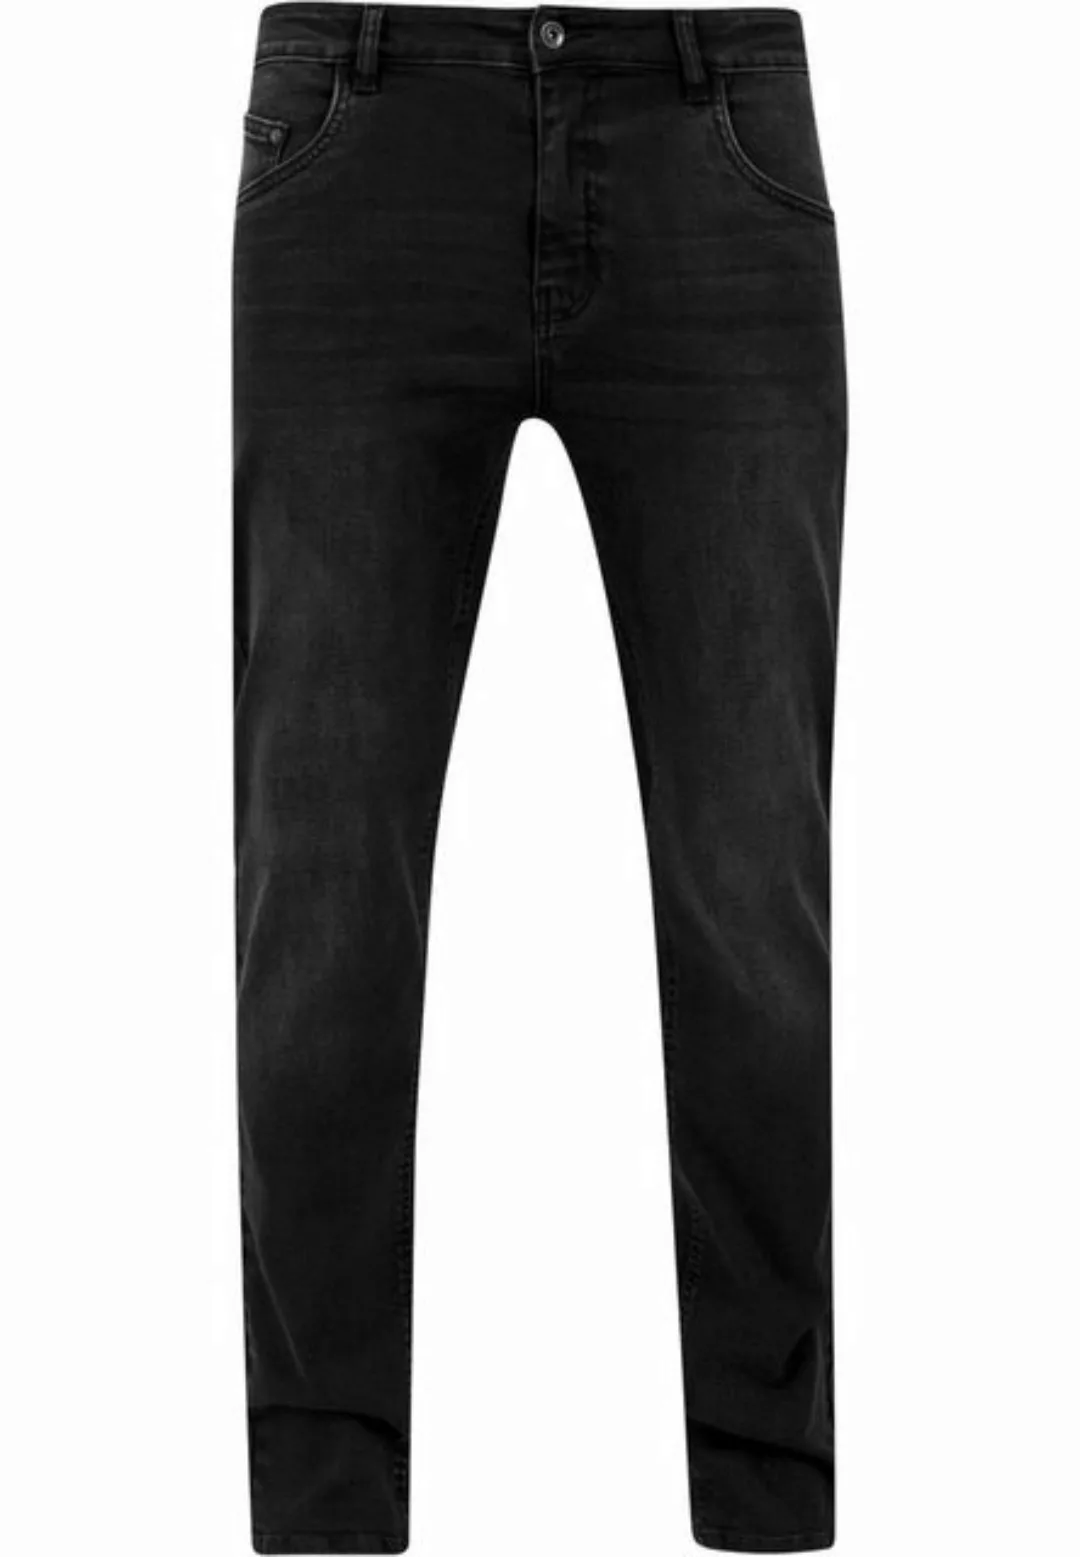 URBAN CLASSICS 5-Pocket-Jeans TB1437 - Stretch Denim Pants black washed 32 günstig online kaufen